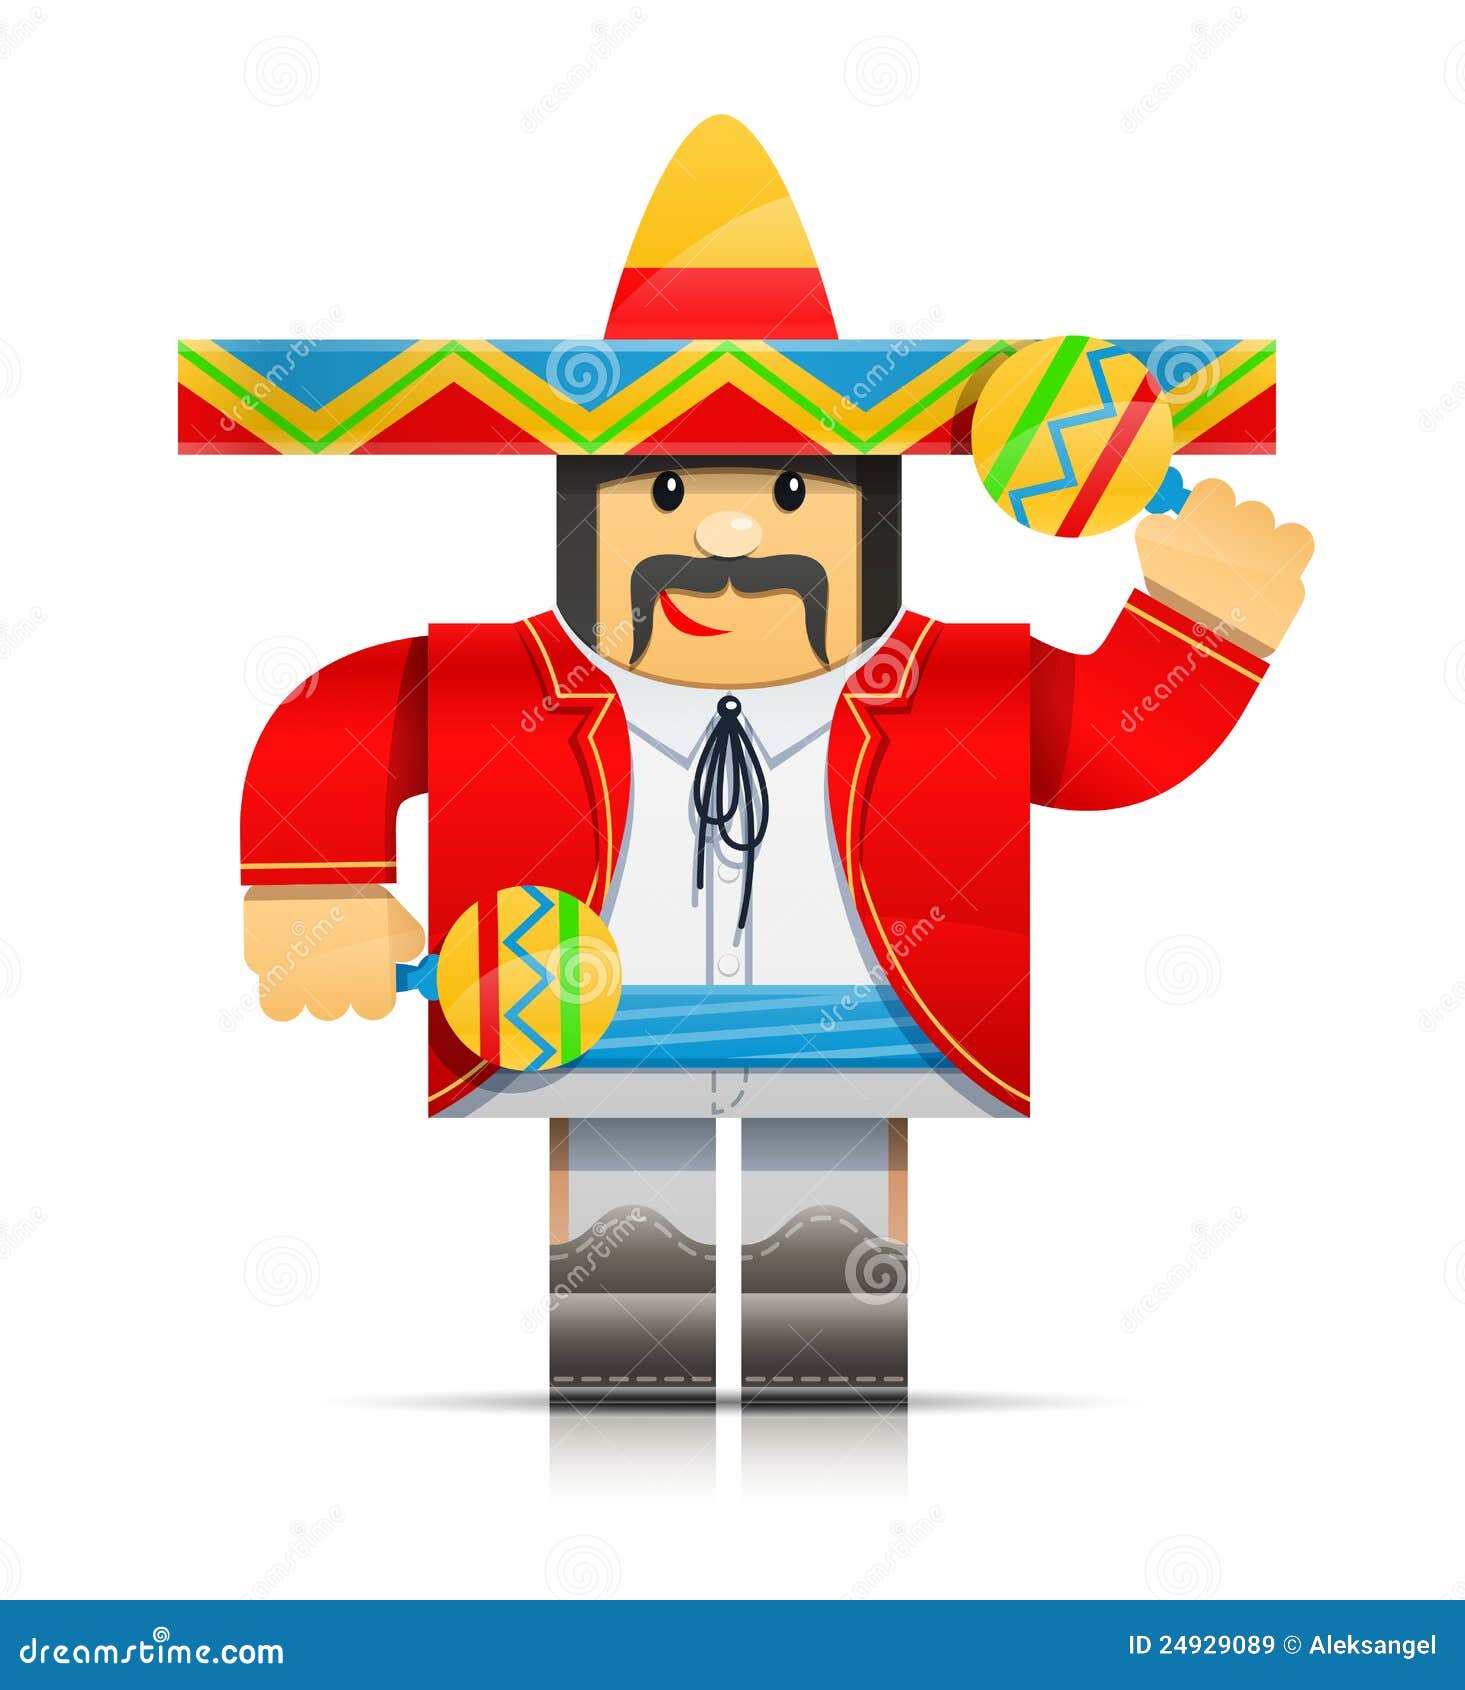 mexicano man origami toy